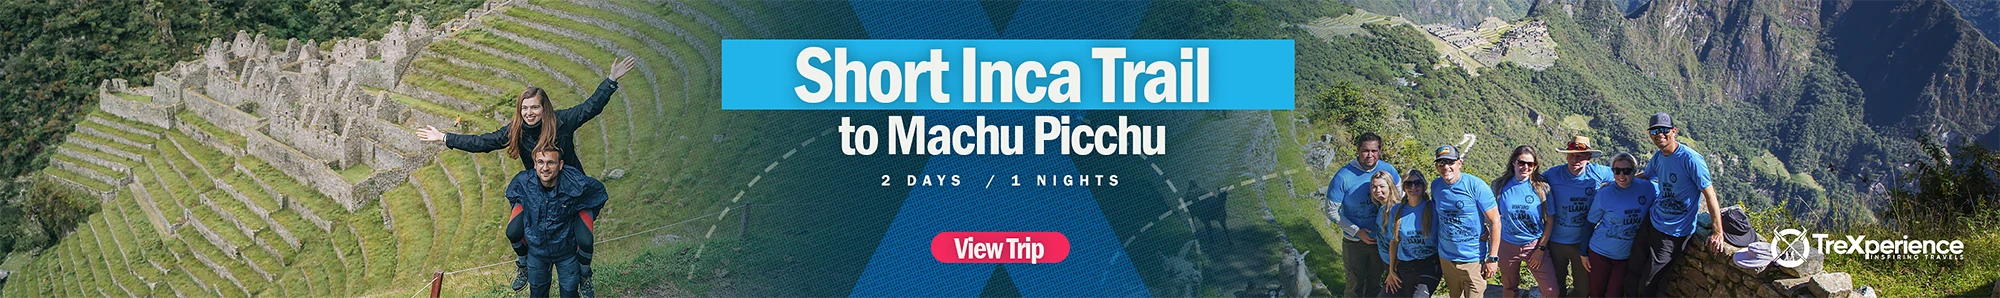 Short Inca Trail to Machu Picchu - Best deals | TreXperience